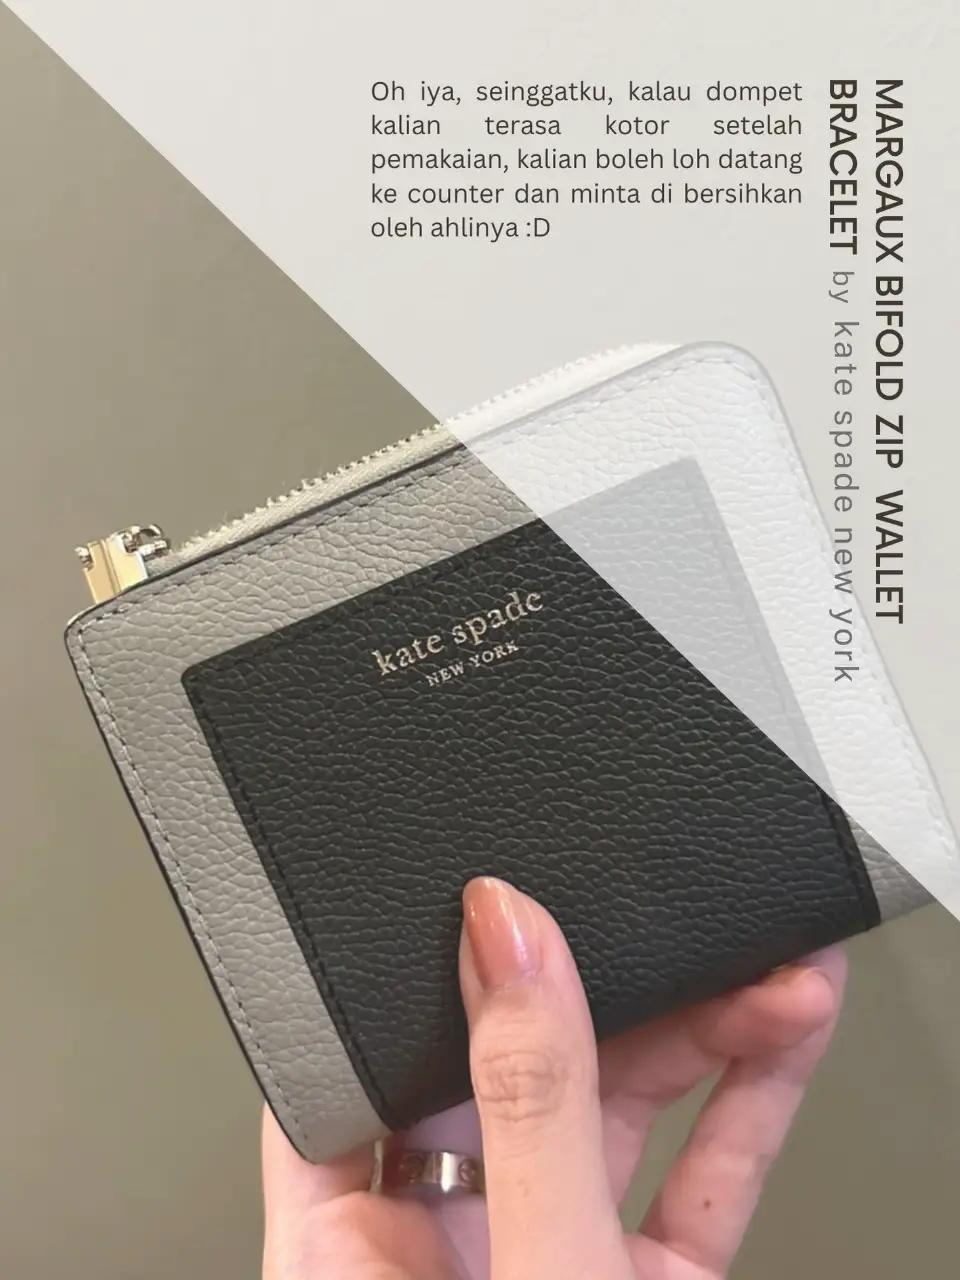 Review Louis Vuitton Bag harga 17 juta?, Gallery posted by Karina Jovita